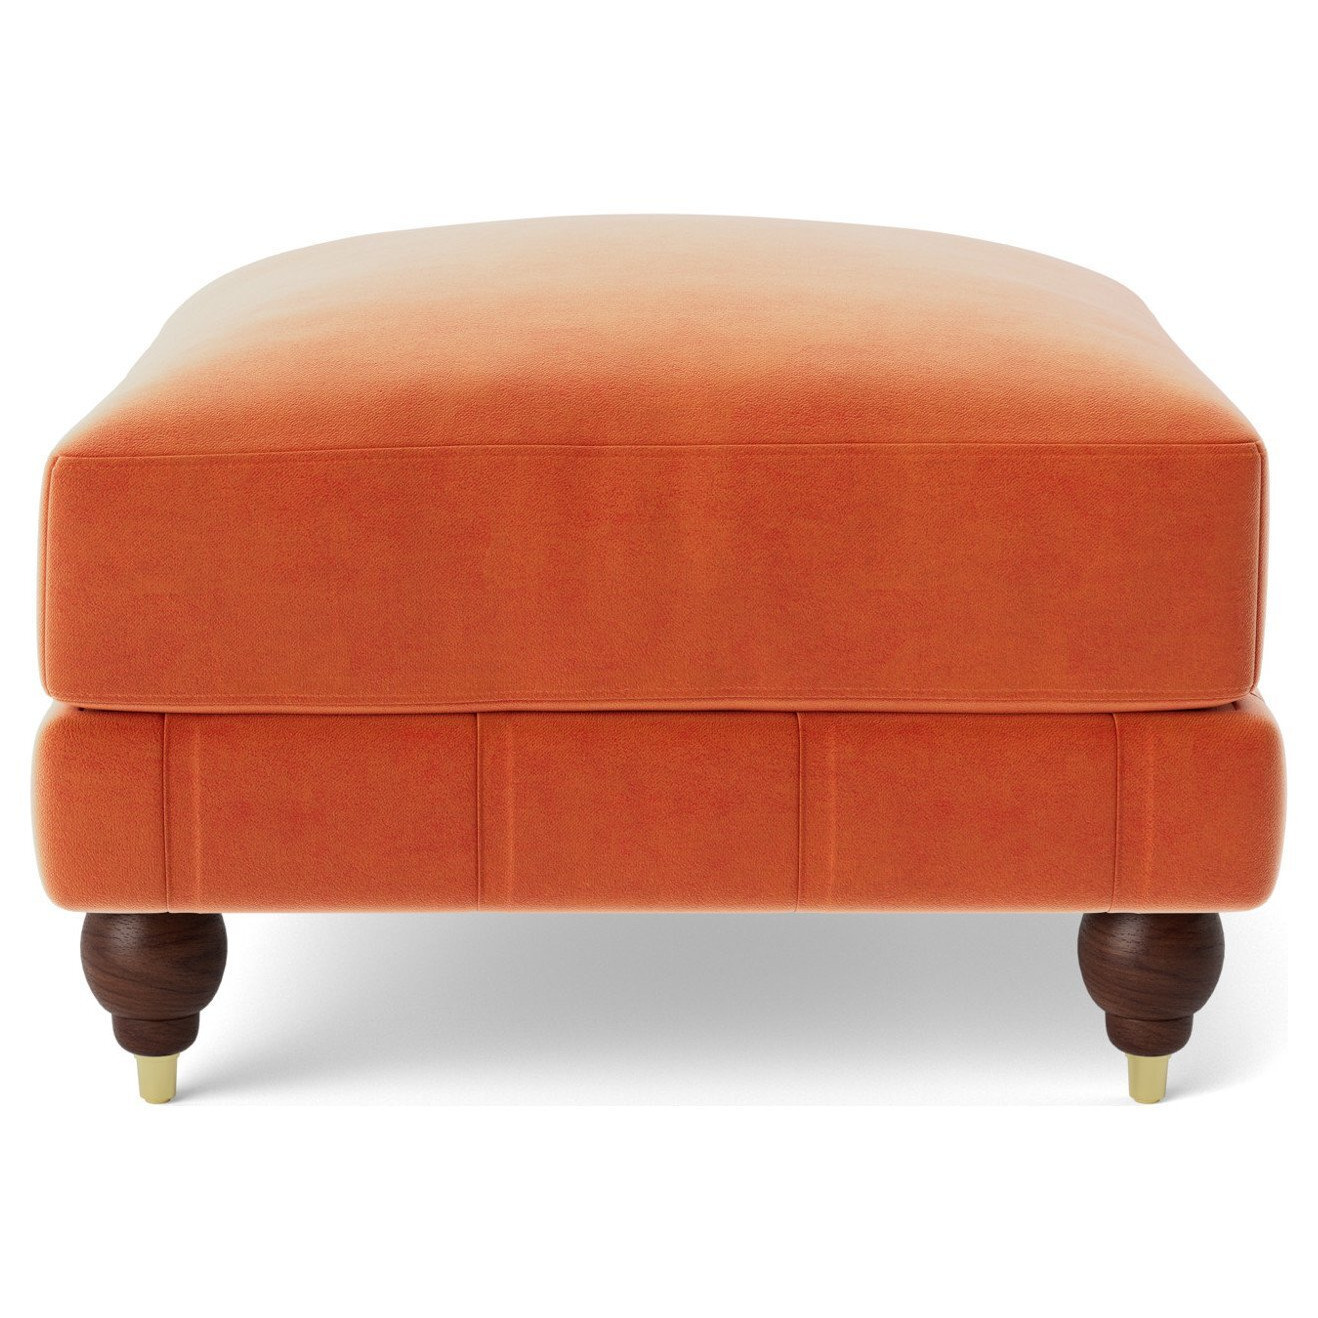 Swoon Winston Velvet Ottoman Footstool - Burnt Orange - image 1